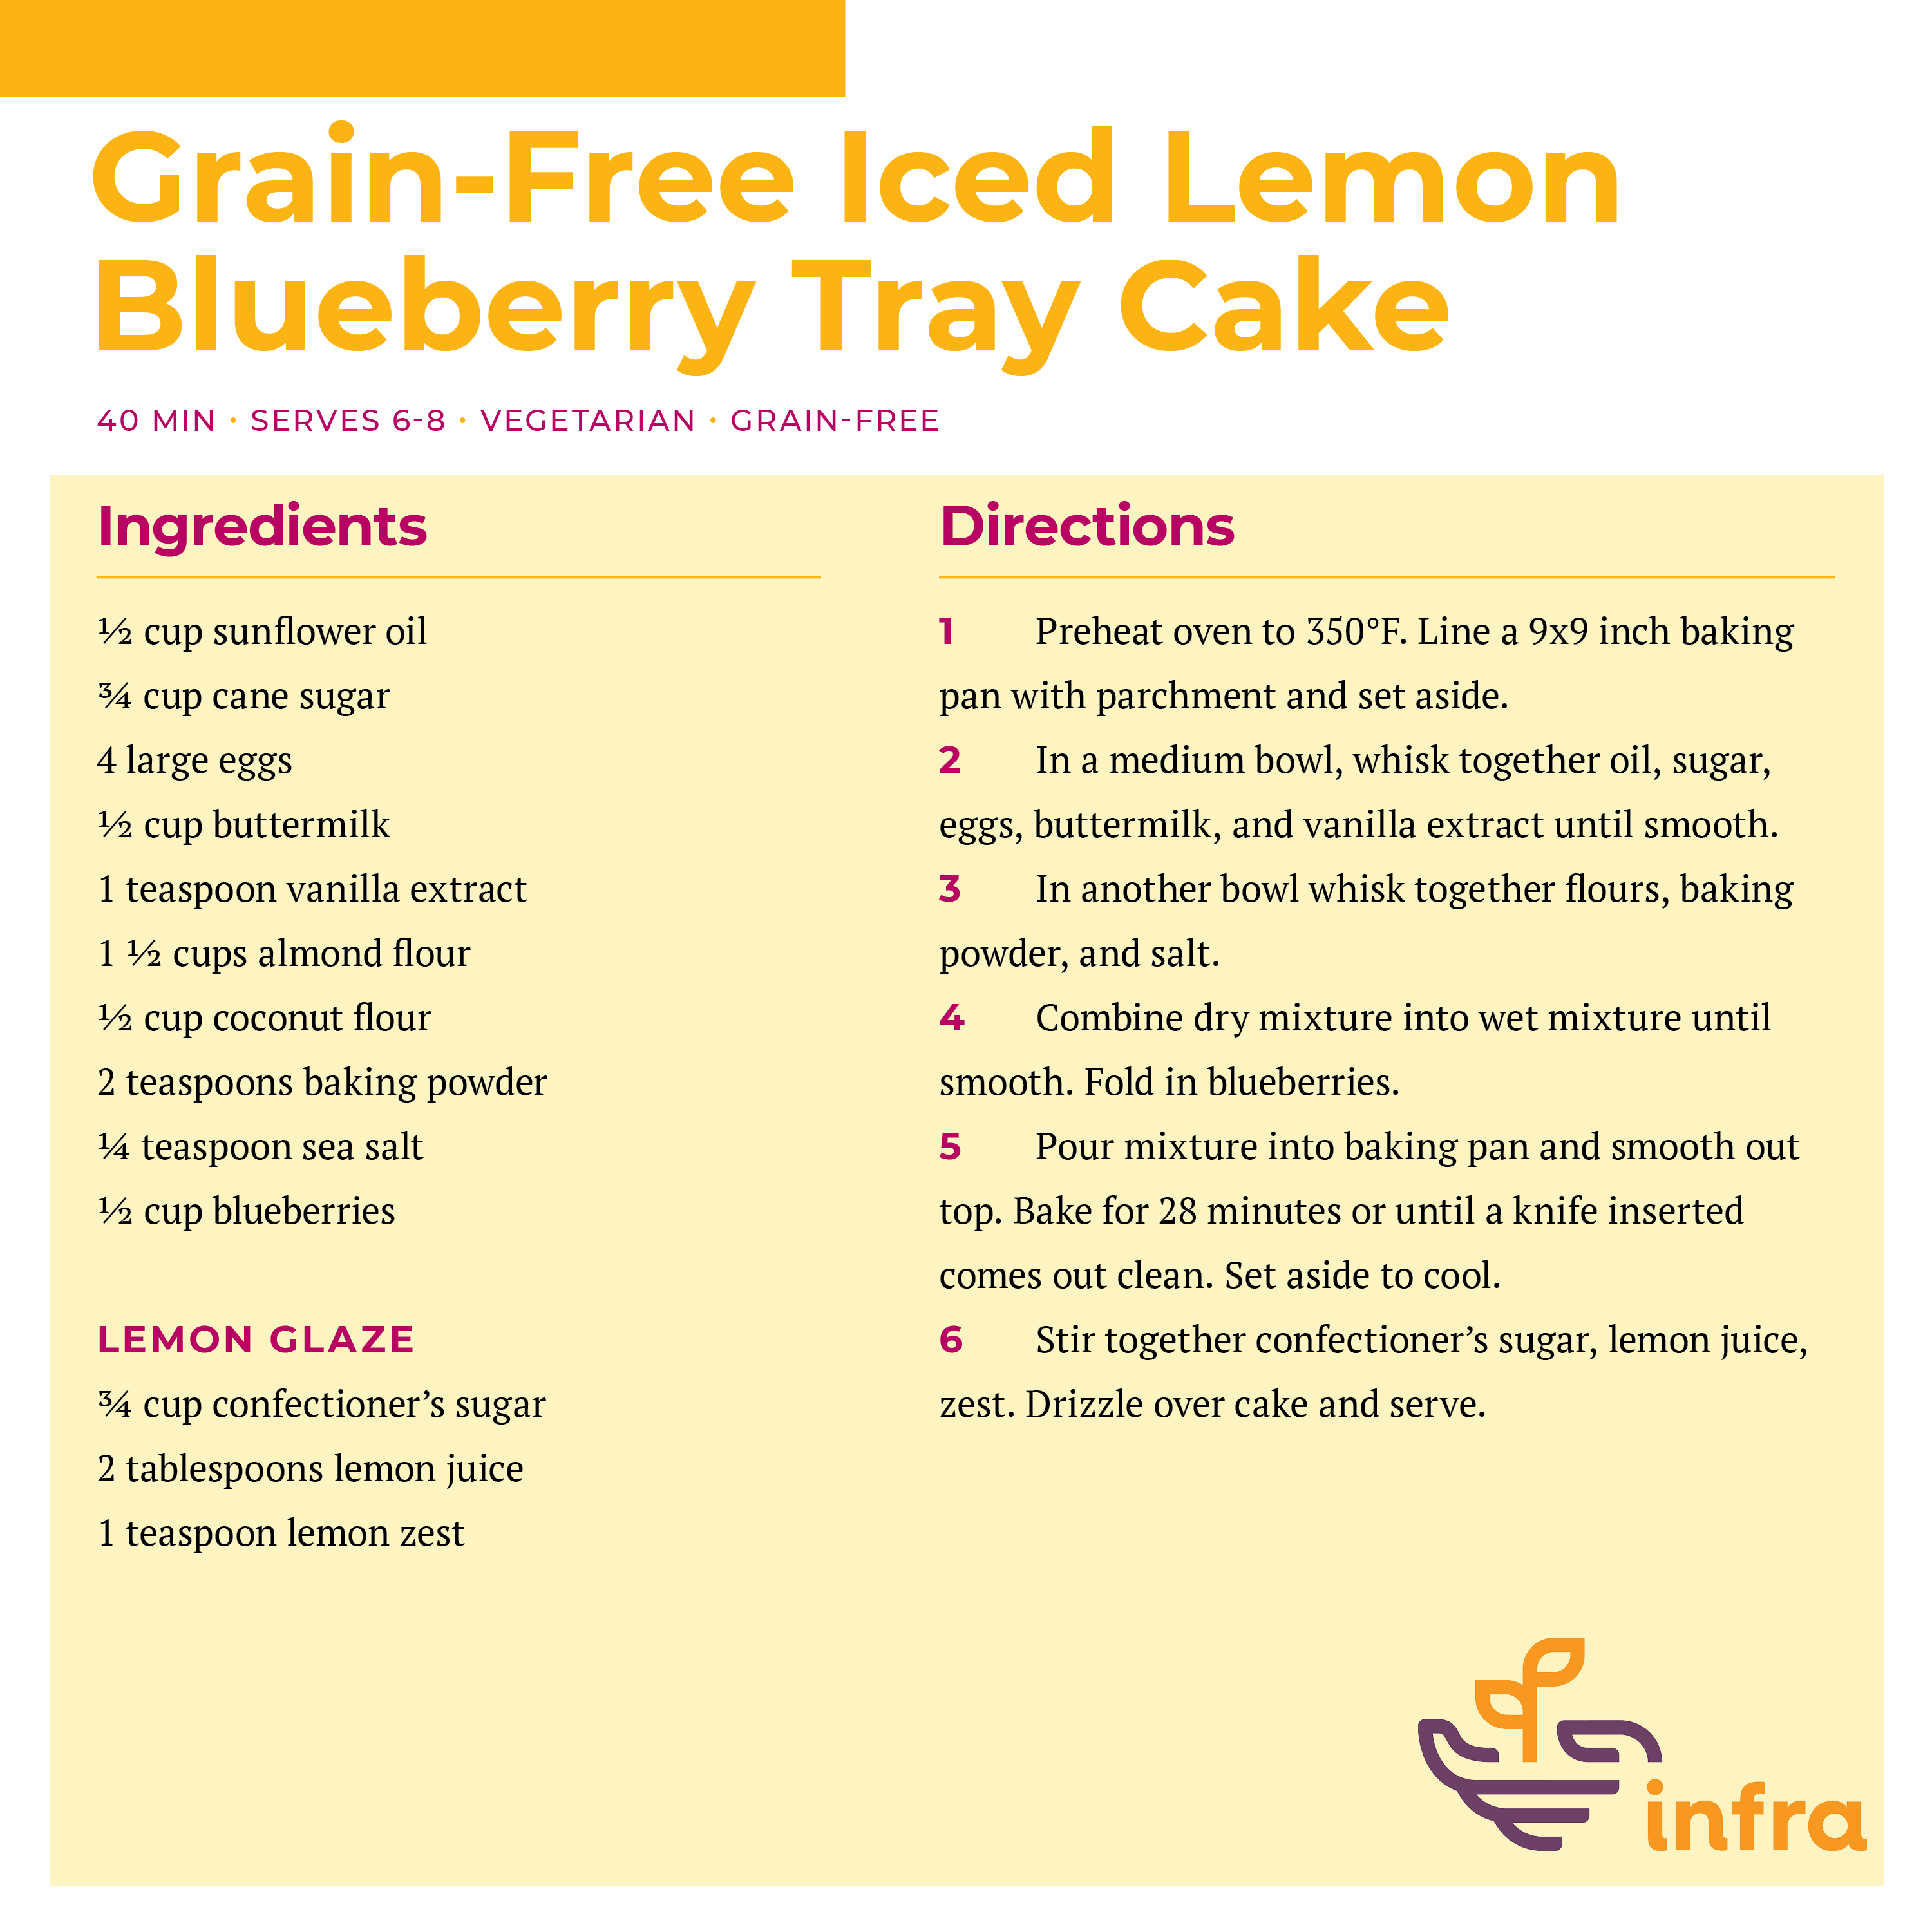 Grain-Free Iced Lemon Blueberry Tray Cake